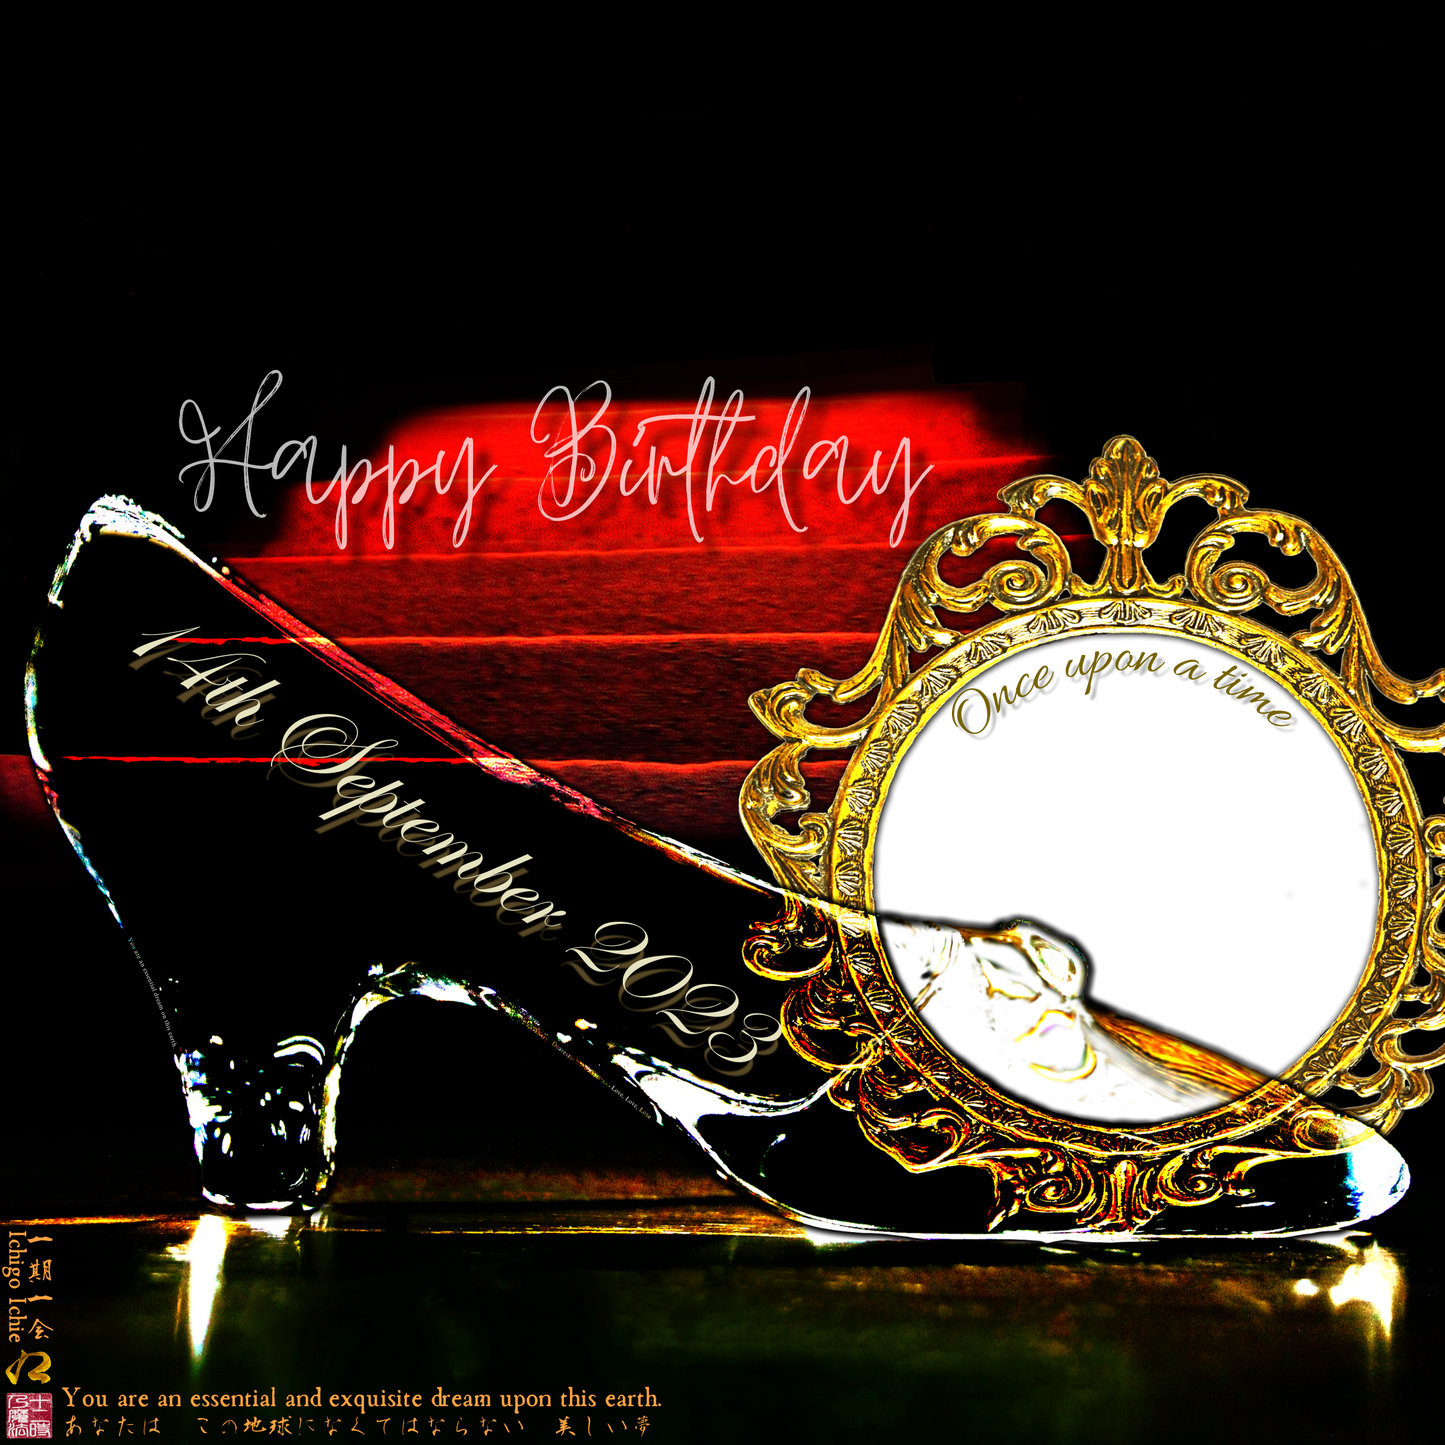 Happy Birthday Glass Slipper "Ichigo Ichie" 14th September 2023 the Right (1-of-1) NFT Art